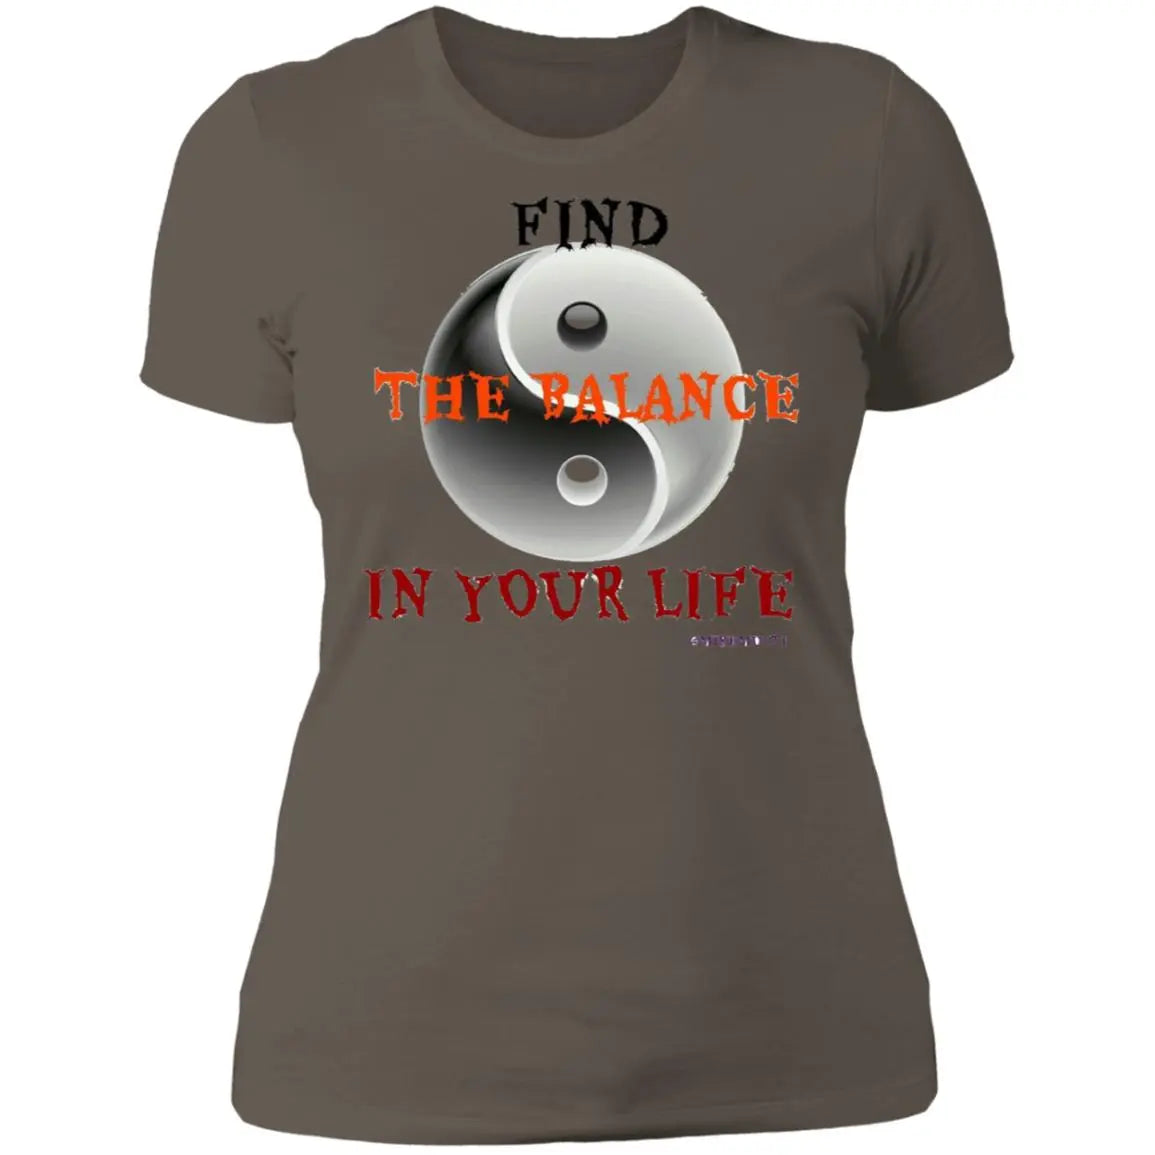 Find The Balance In Your Life - Ladies' Boyfriend T-Shirt CustomCat